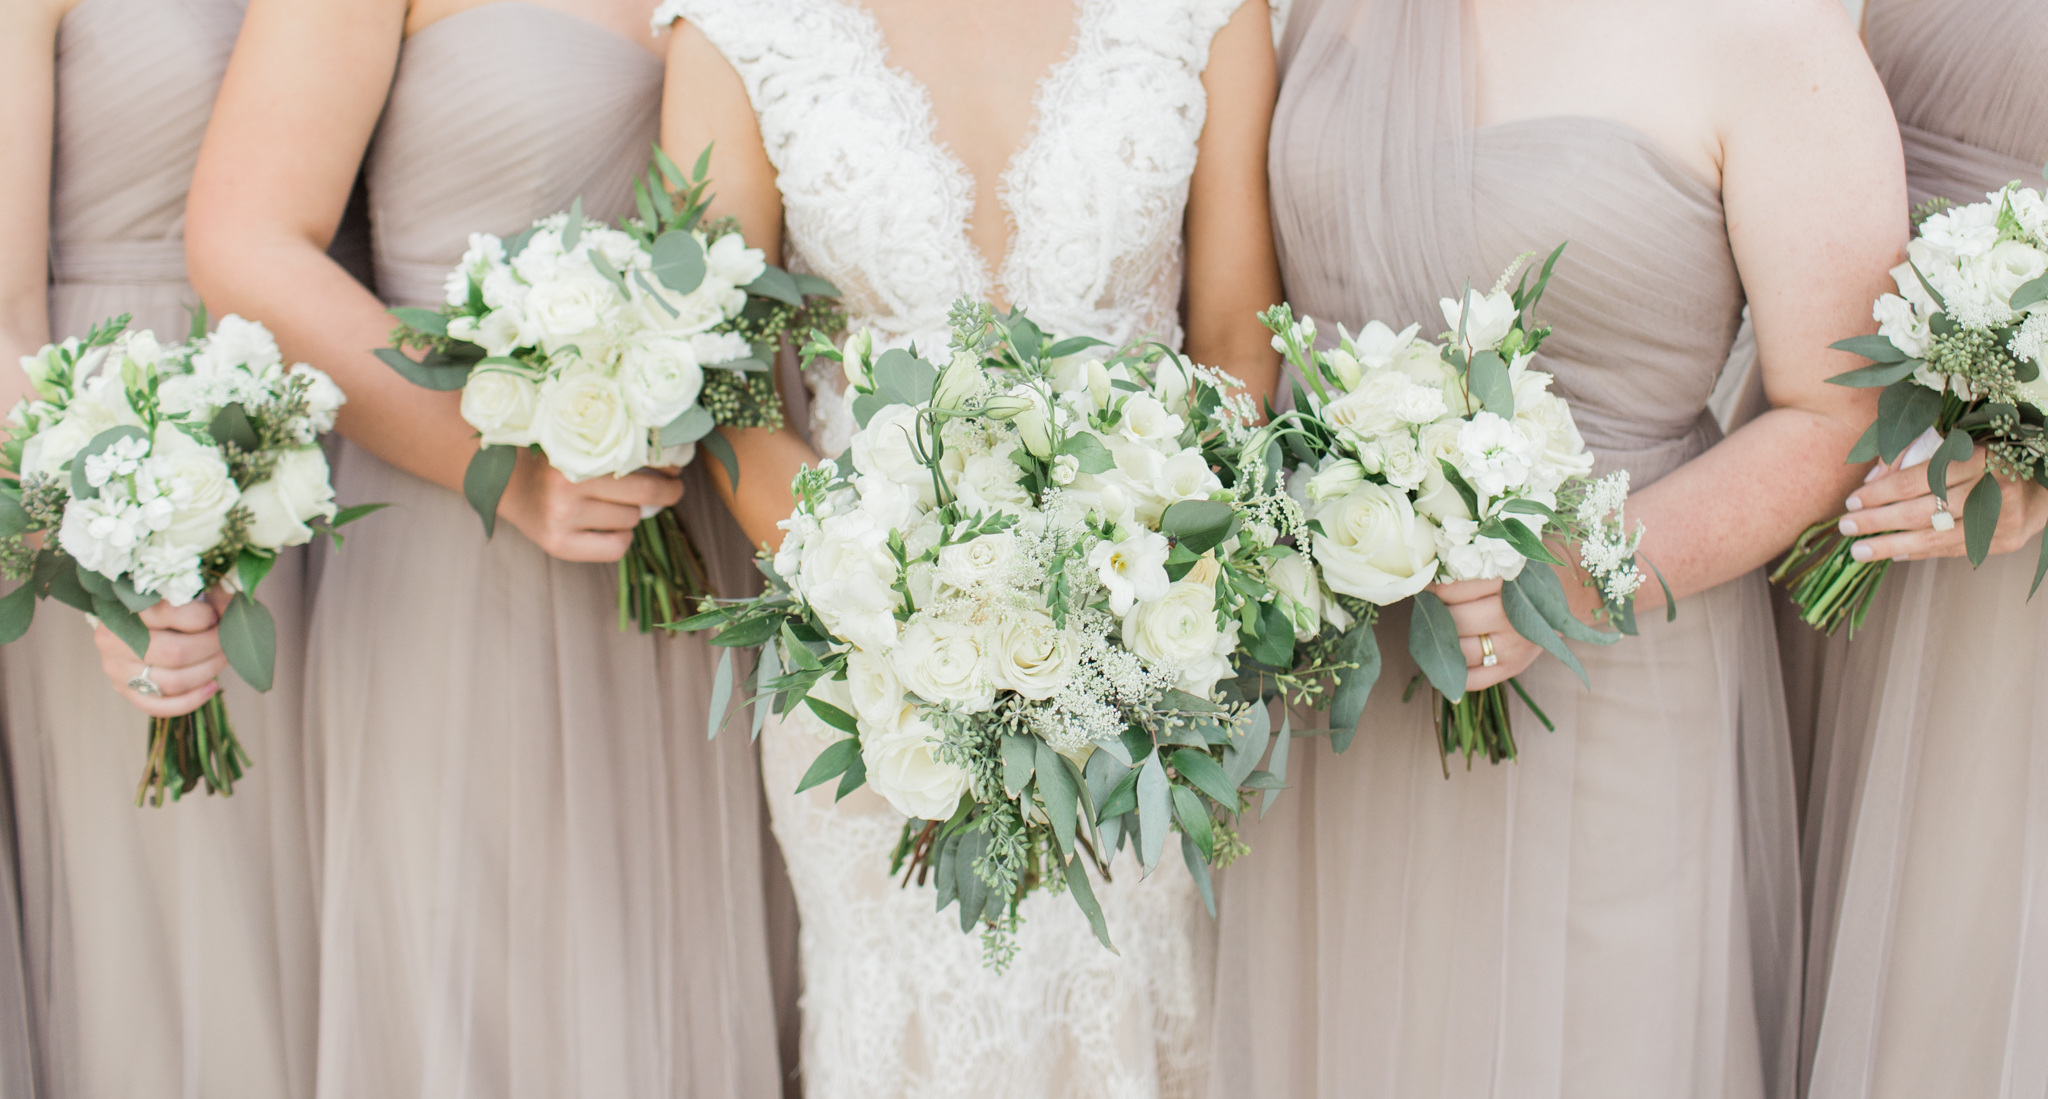 Neutral wedding color palette idea photographed by Rebecca Cerasani